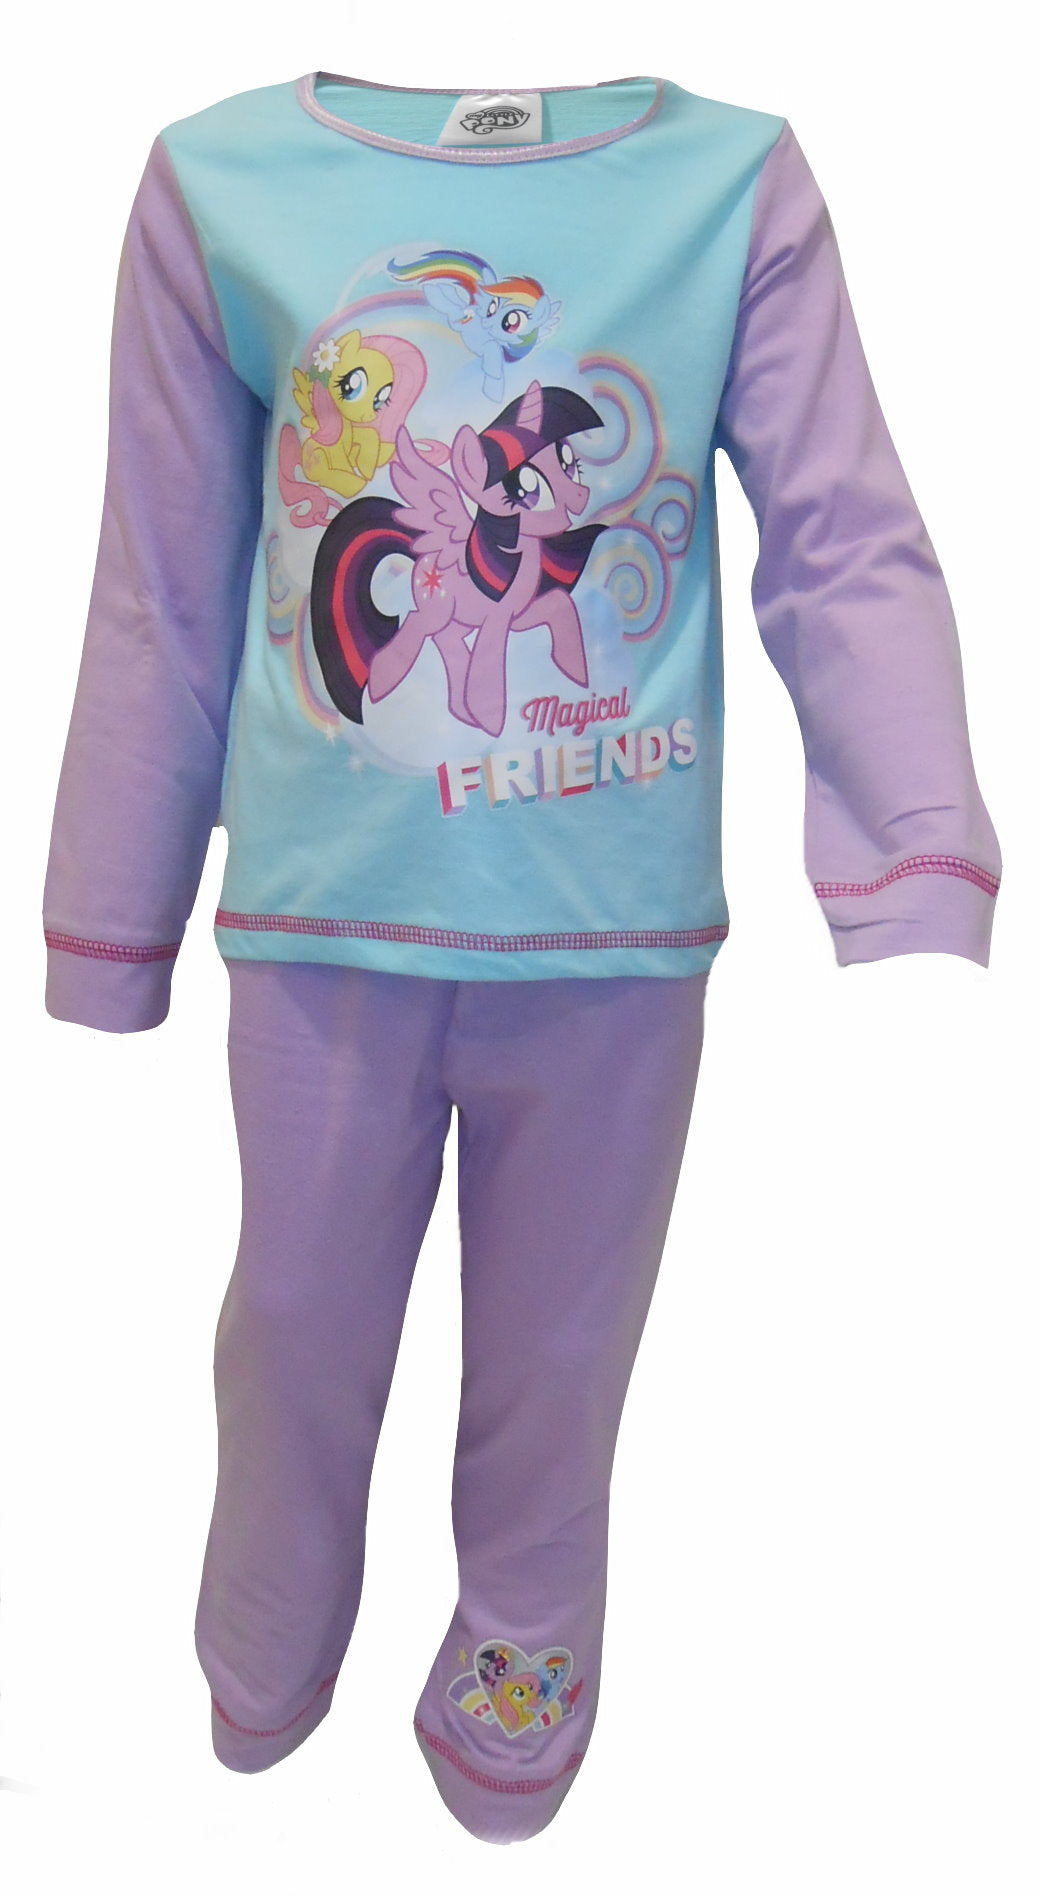 My Little Pony "Magical Friends" Girls Pyjamas 1-4 Years